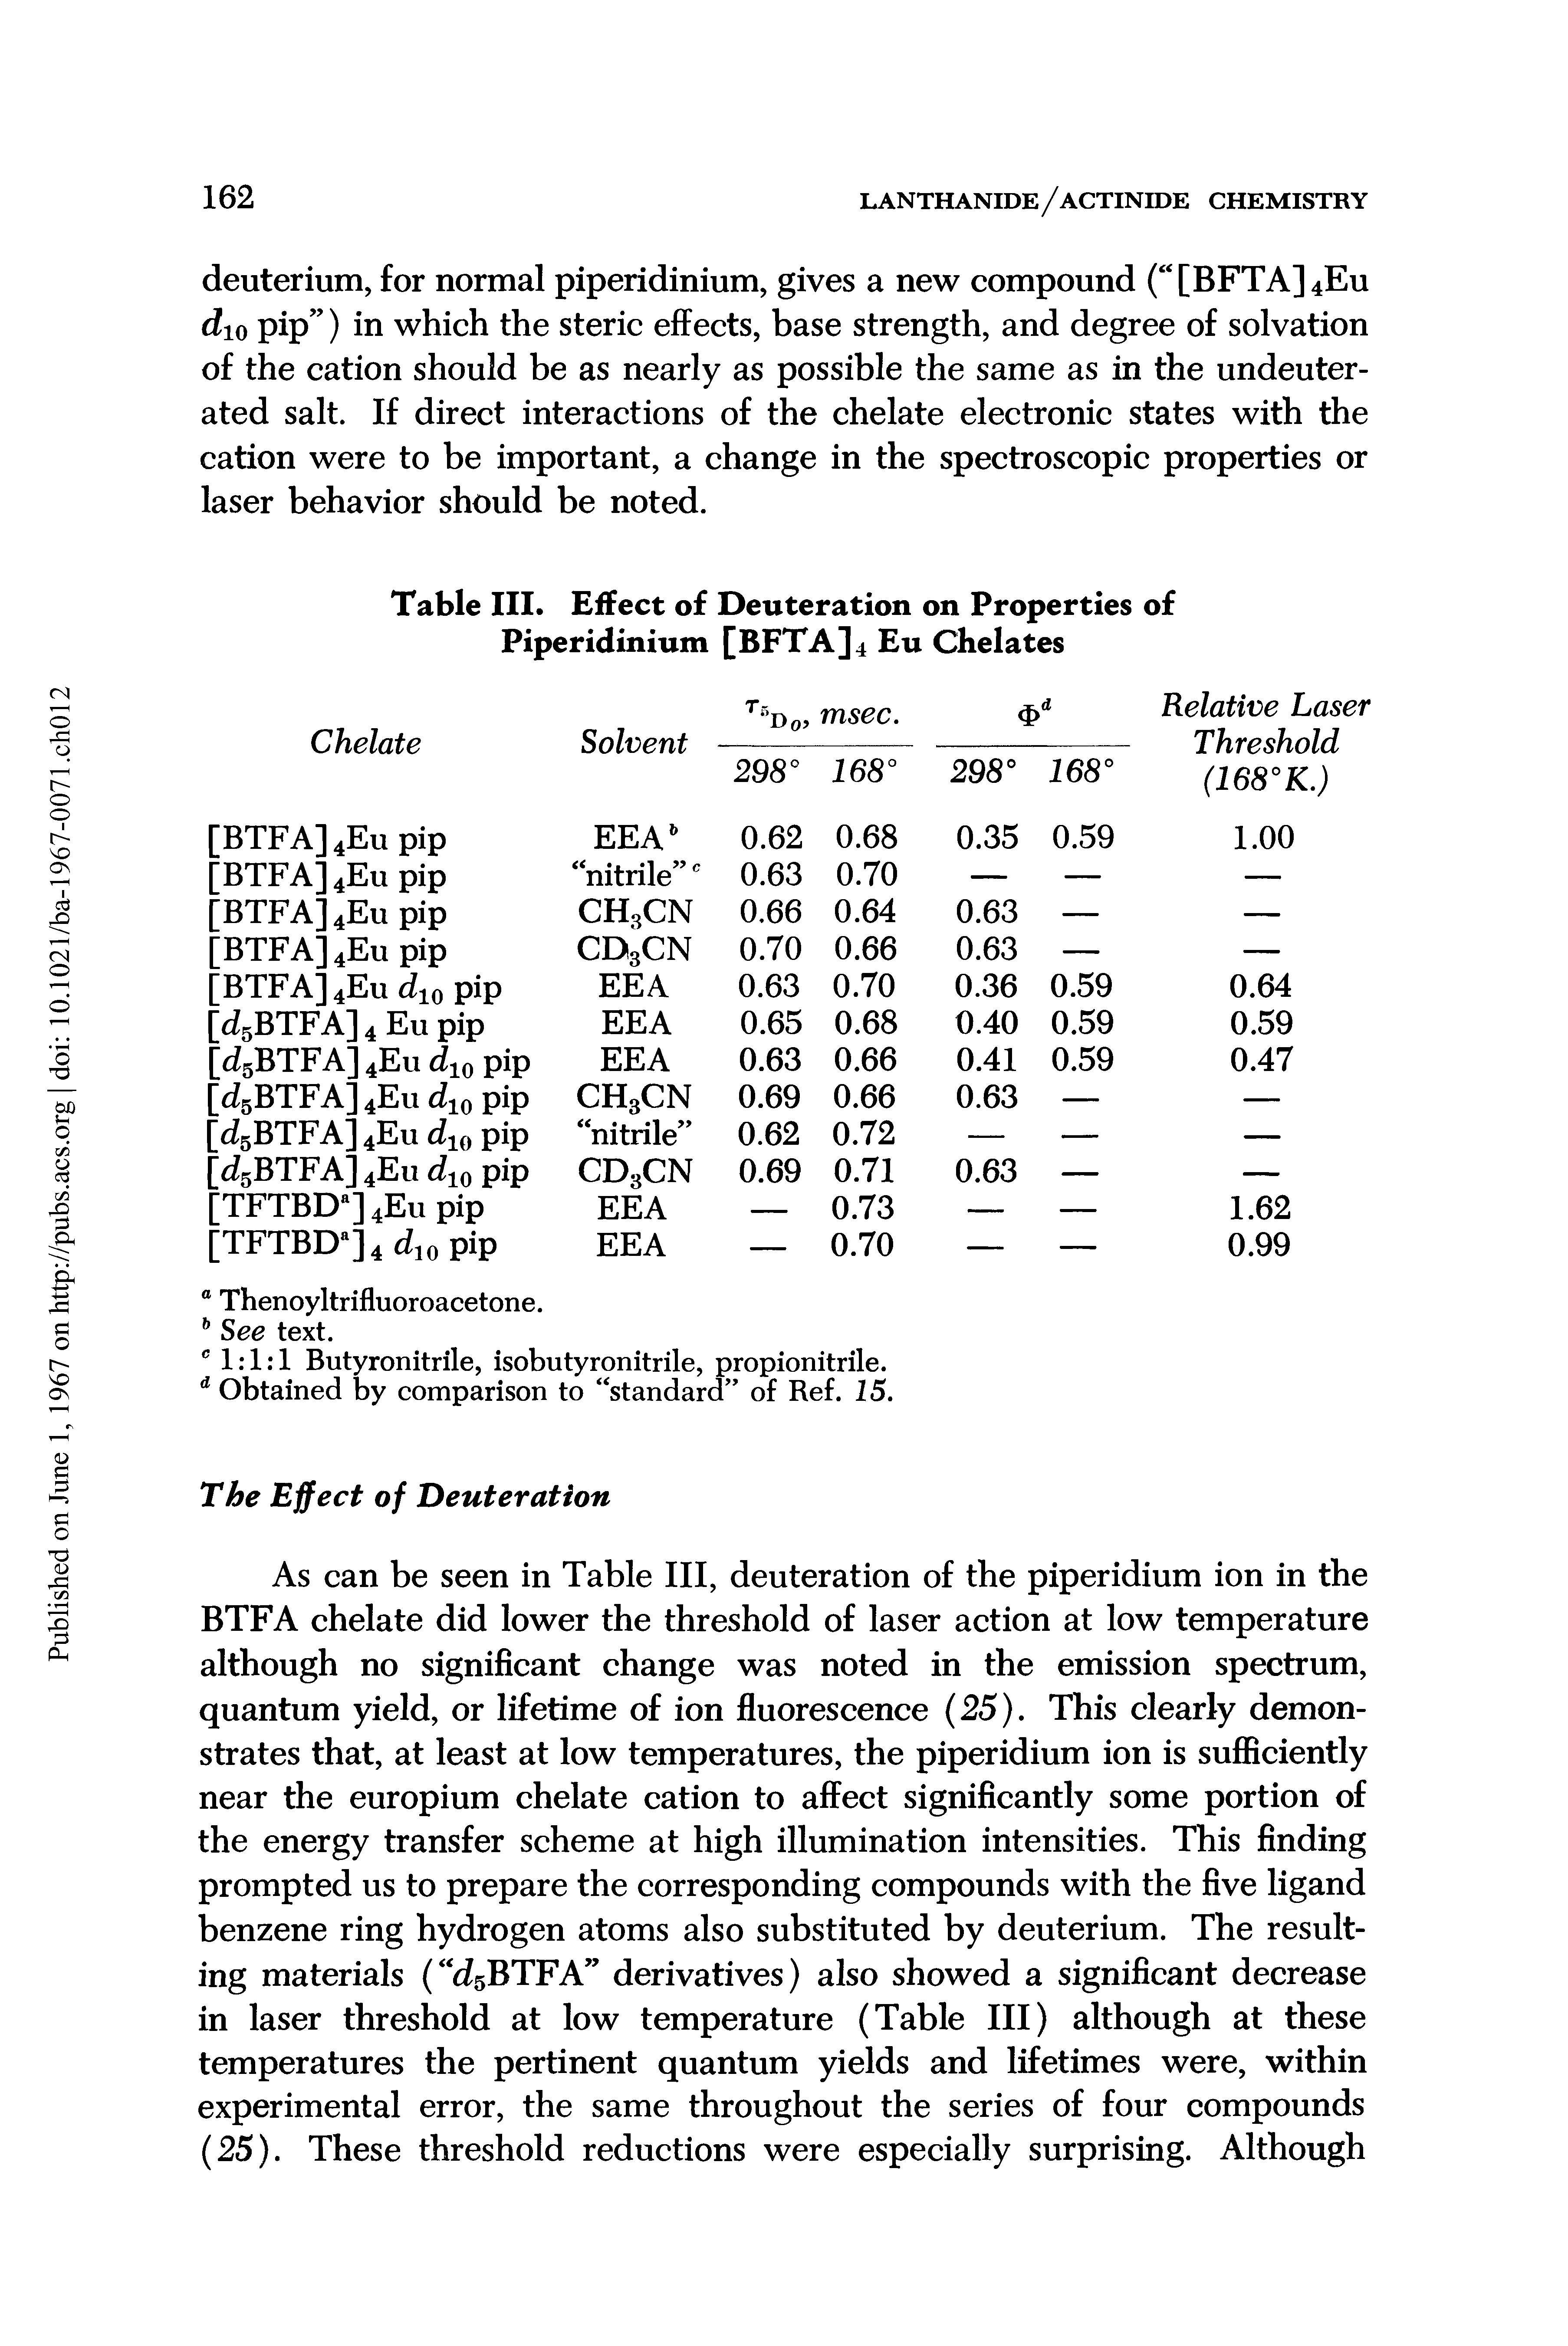 Table III. Effect of Deuteration on Properties of Piperidinium [BETA]4 Eu Chelates...